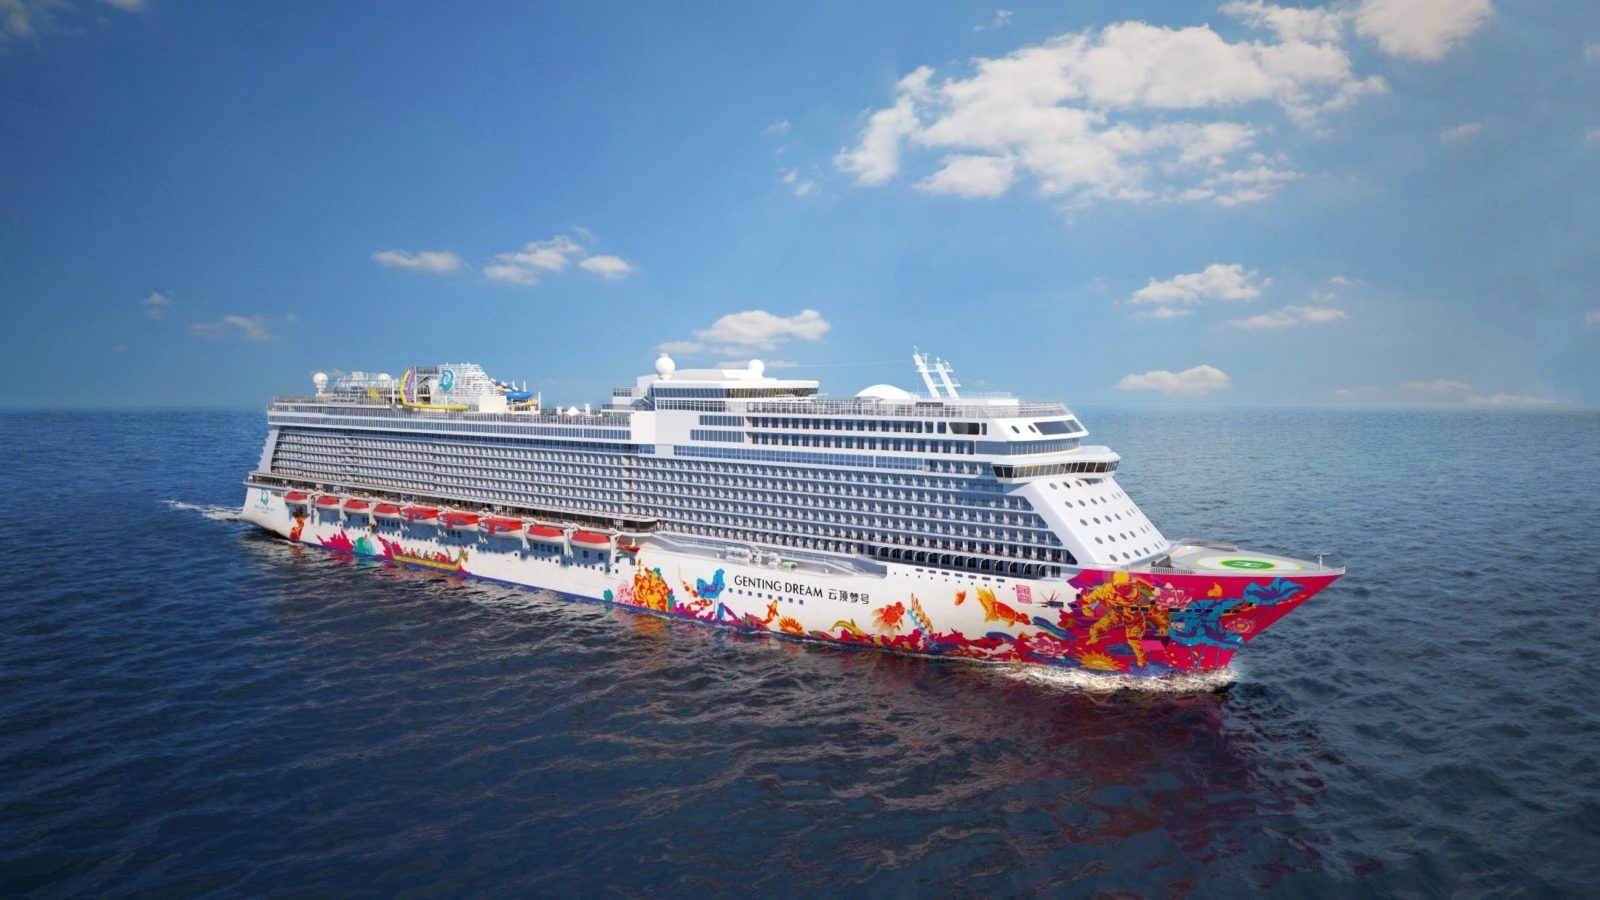 Genting Dream to set sail in Singapore under new brand Resorts World Cruises